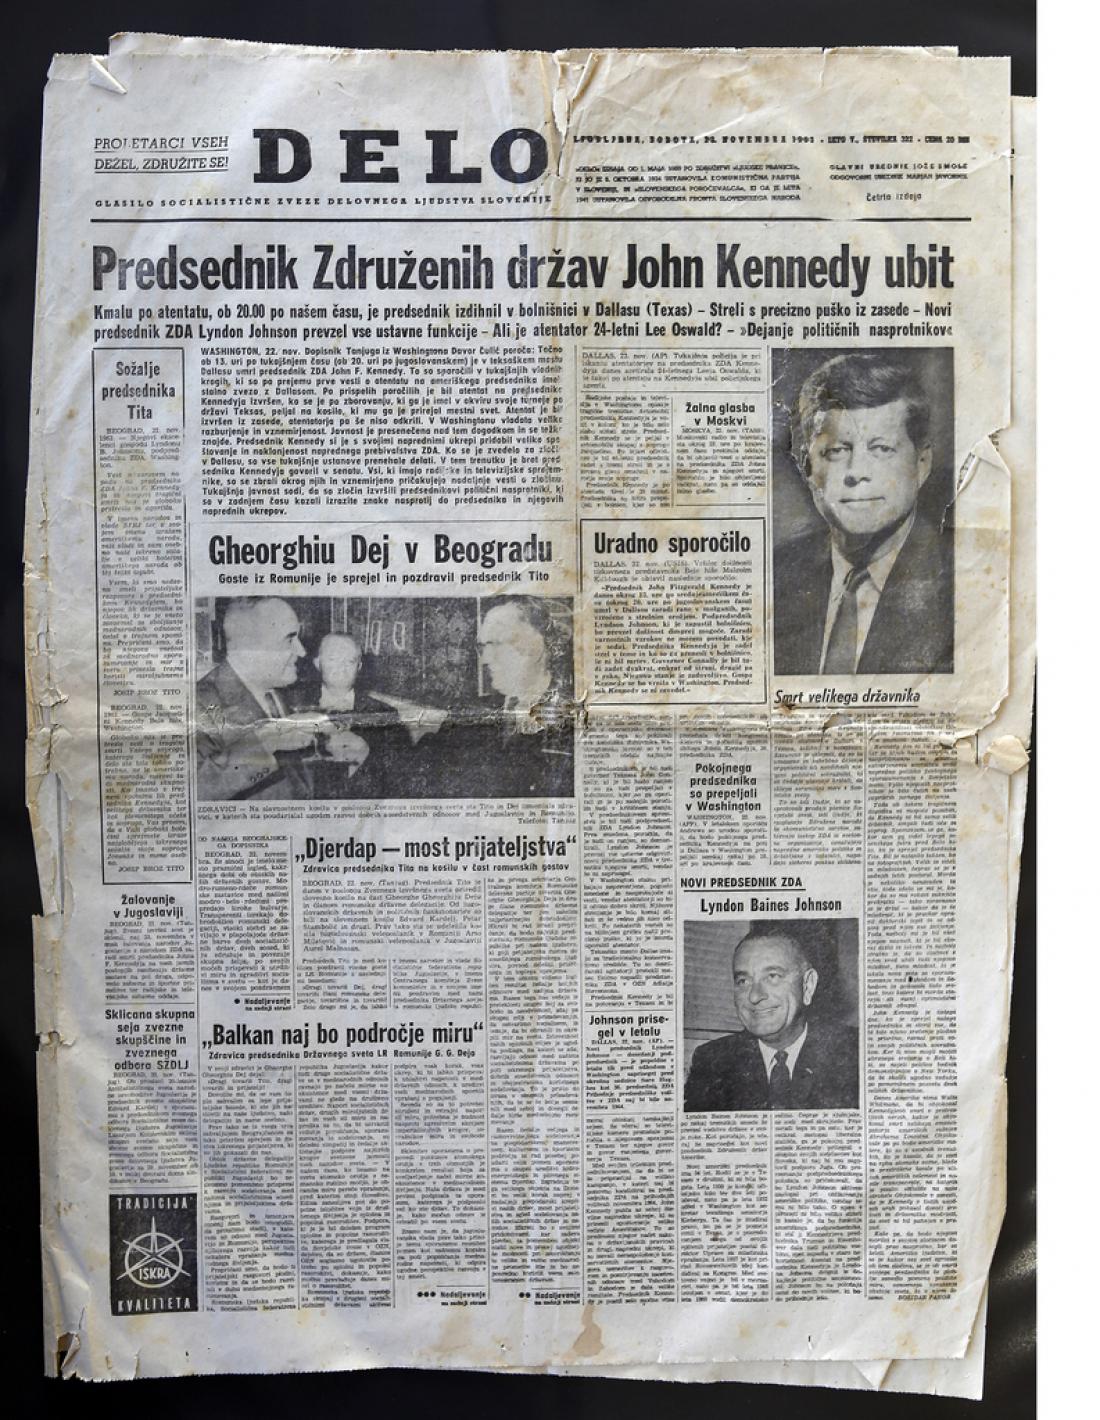 Gradivo o atentatu na Kennedyja objavljeno!